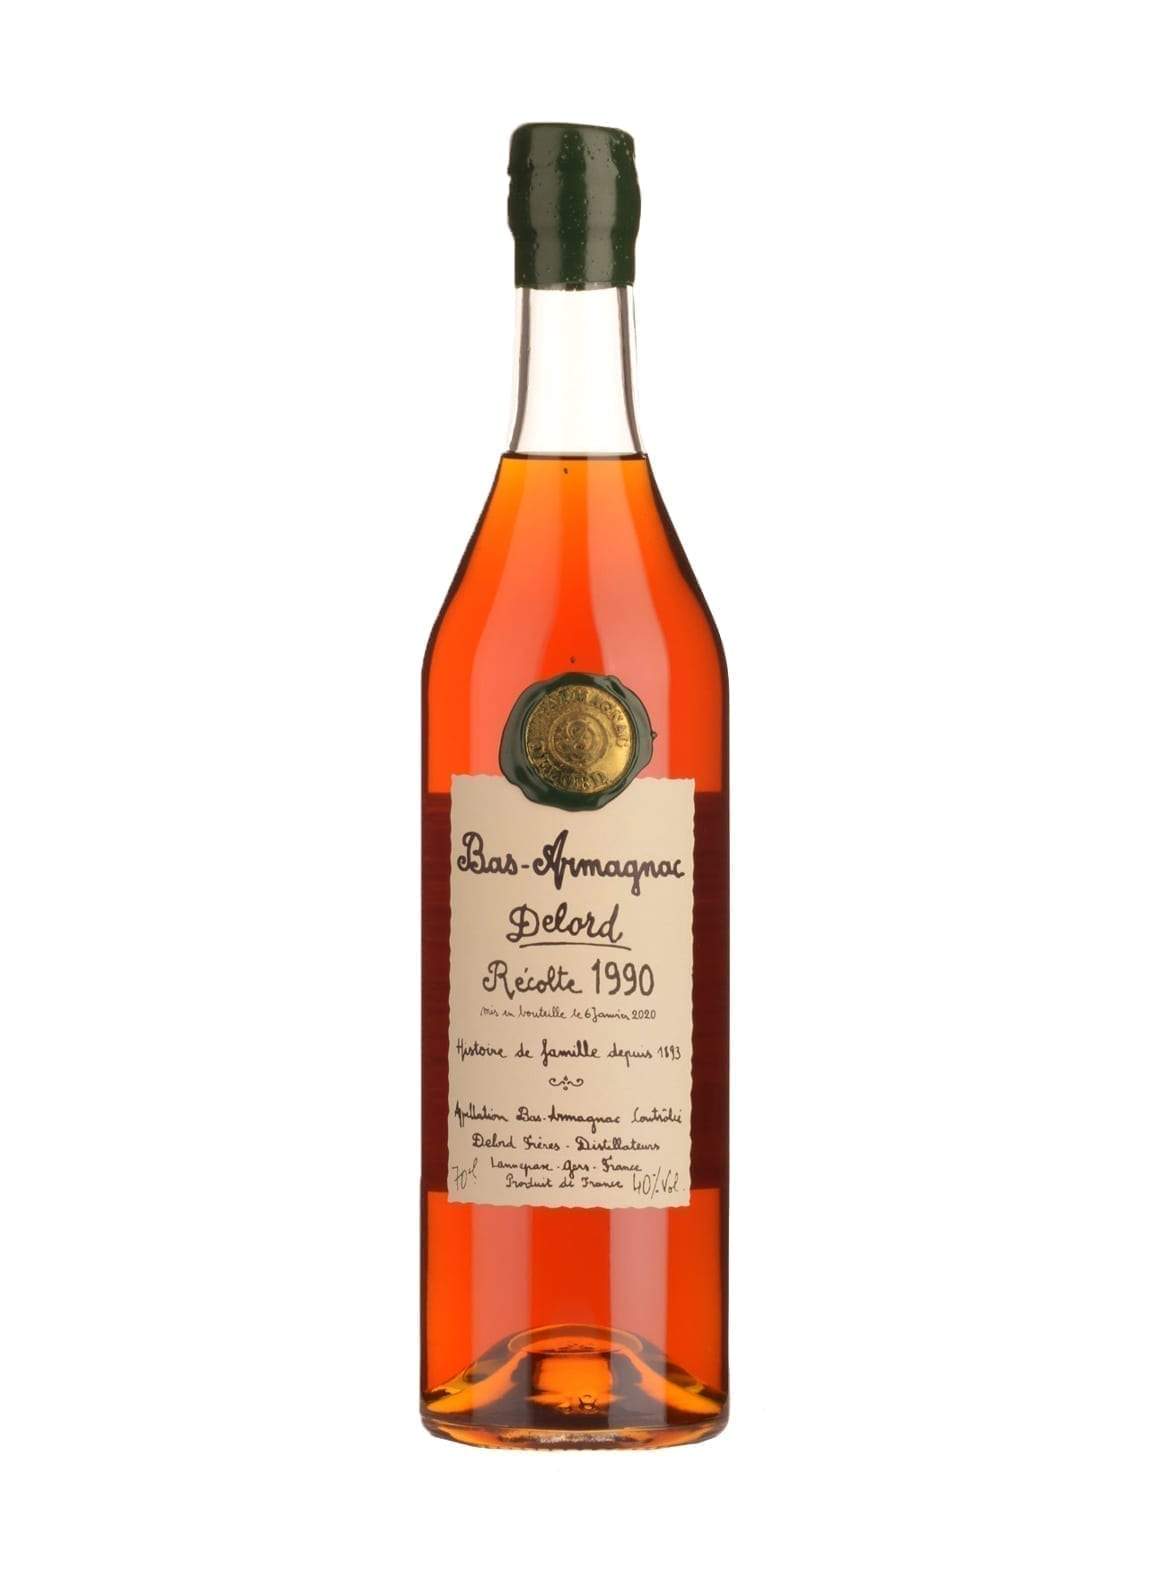 Delord 1990 Bas Armagnac 40% 700ml | Brandy | Shop online at Spirits of France